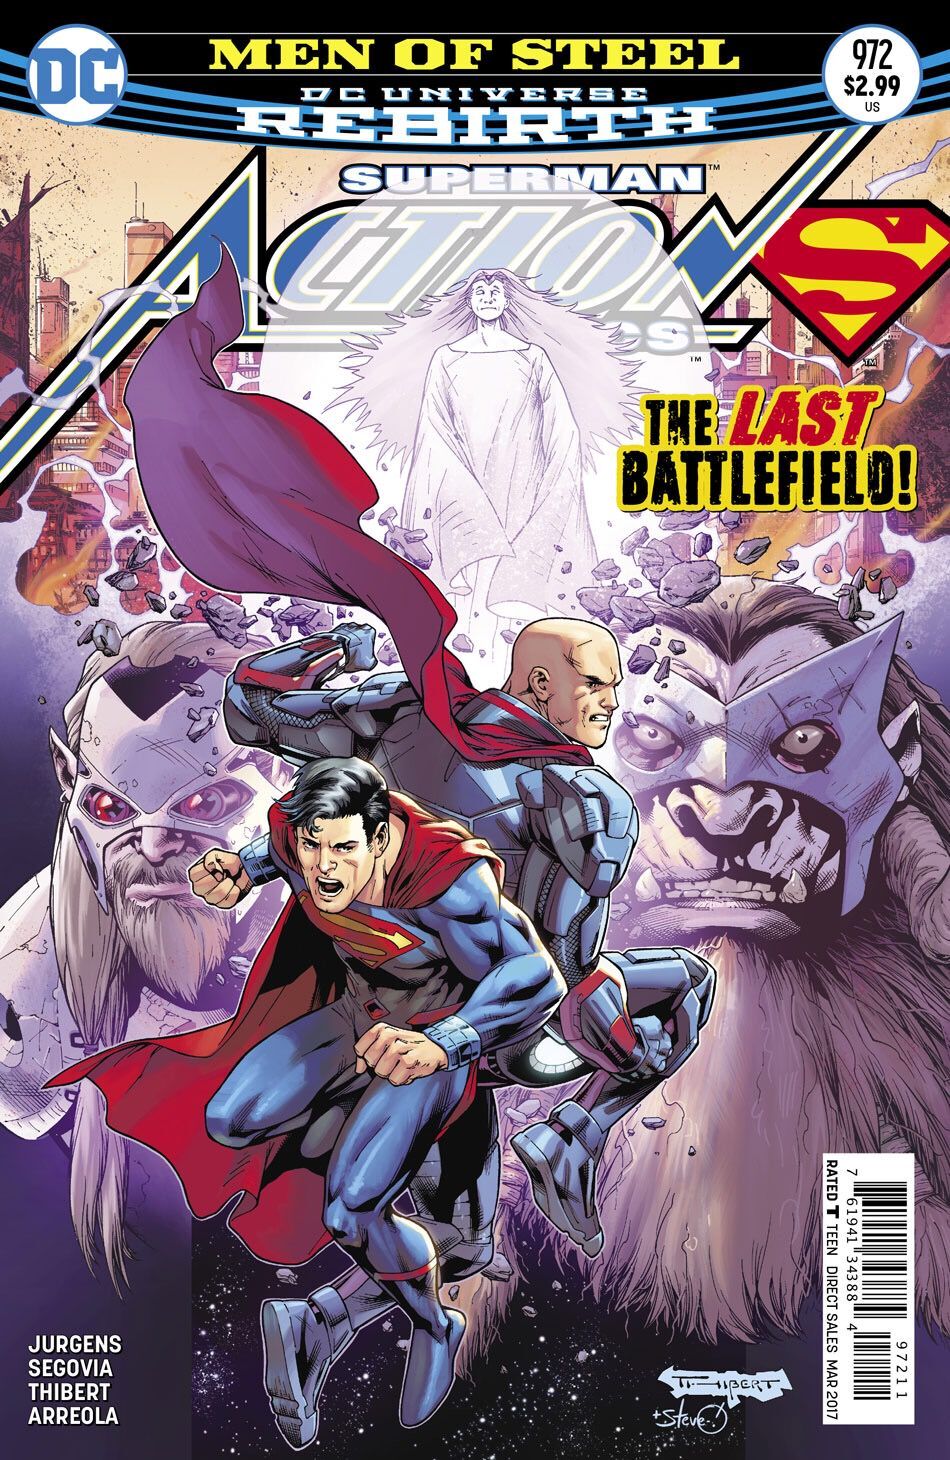 Men of Steel DC Rebirth Comics Issue 972